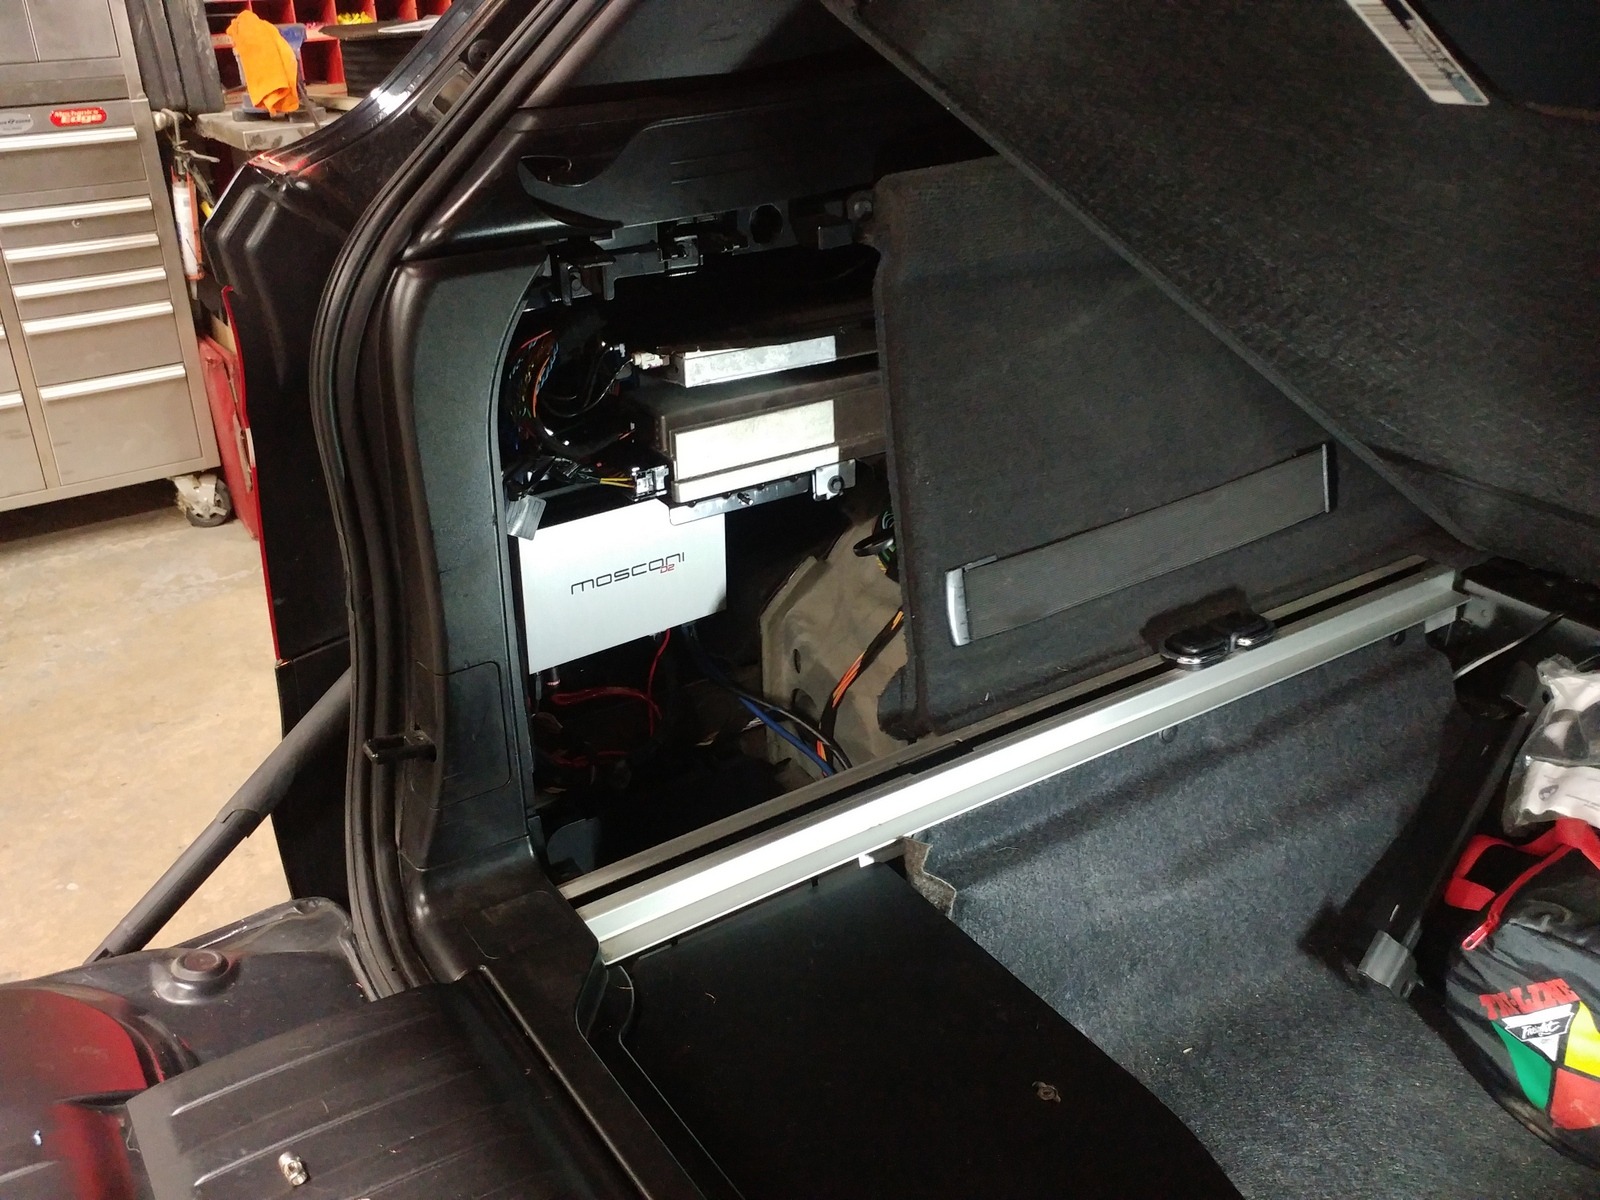 Mosconi D2 amplifier BMW x50